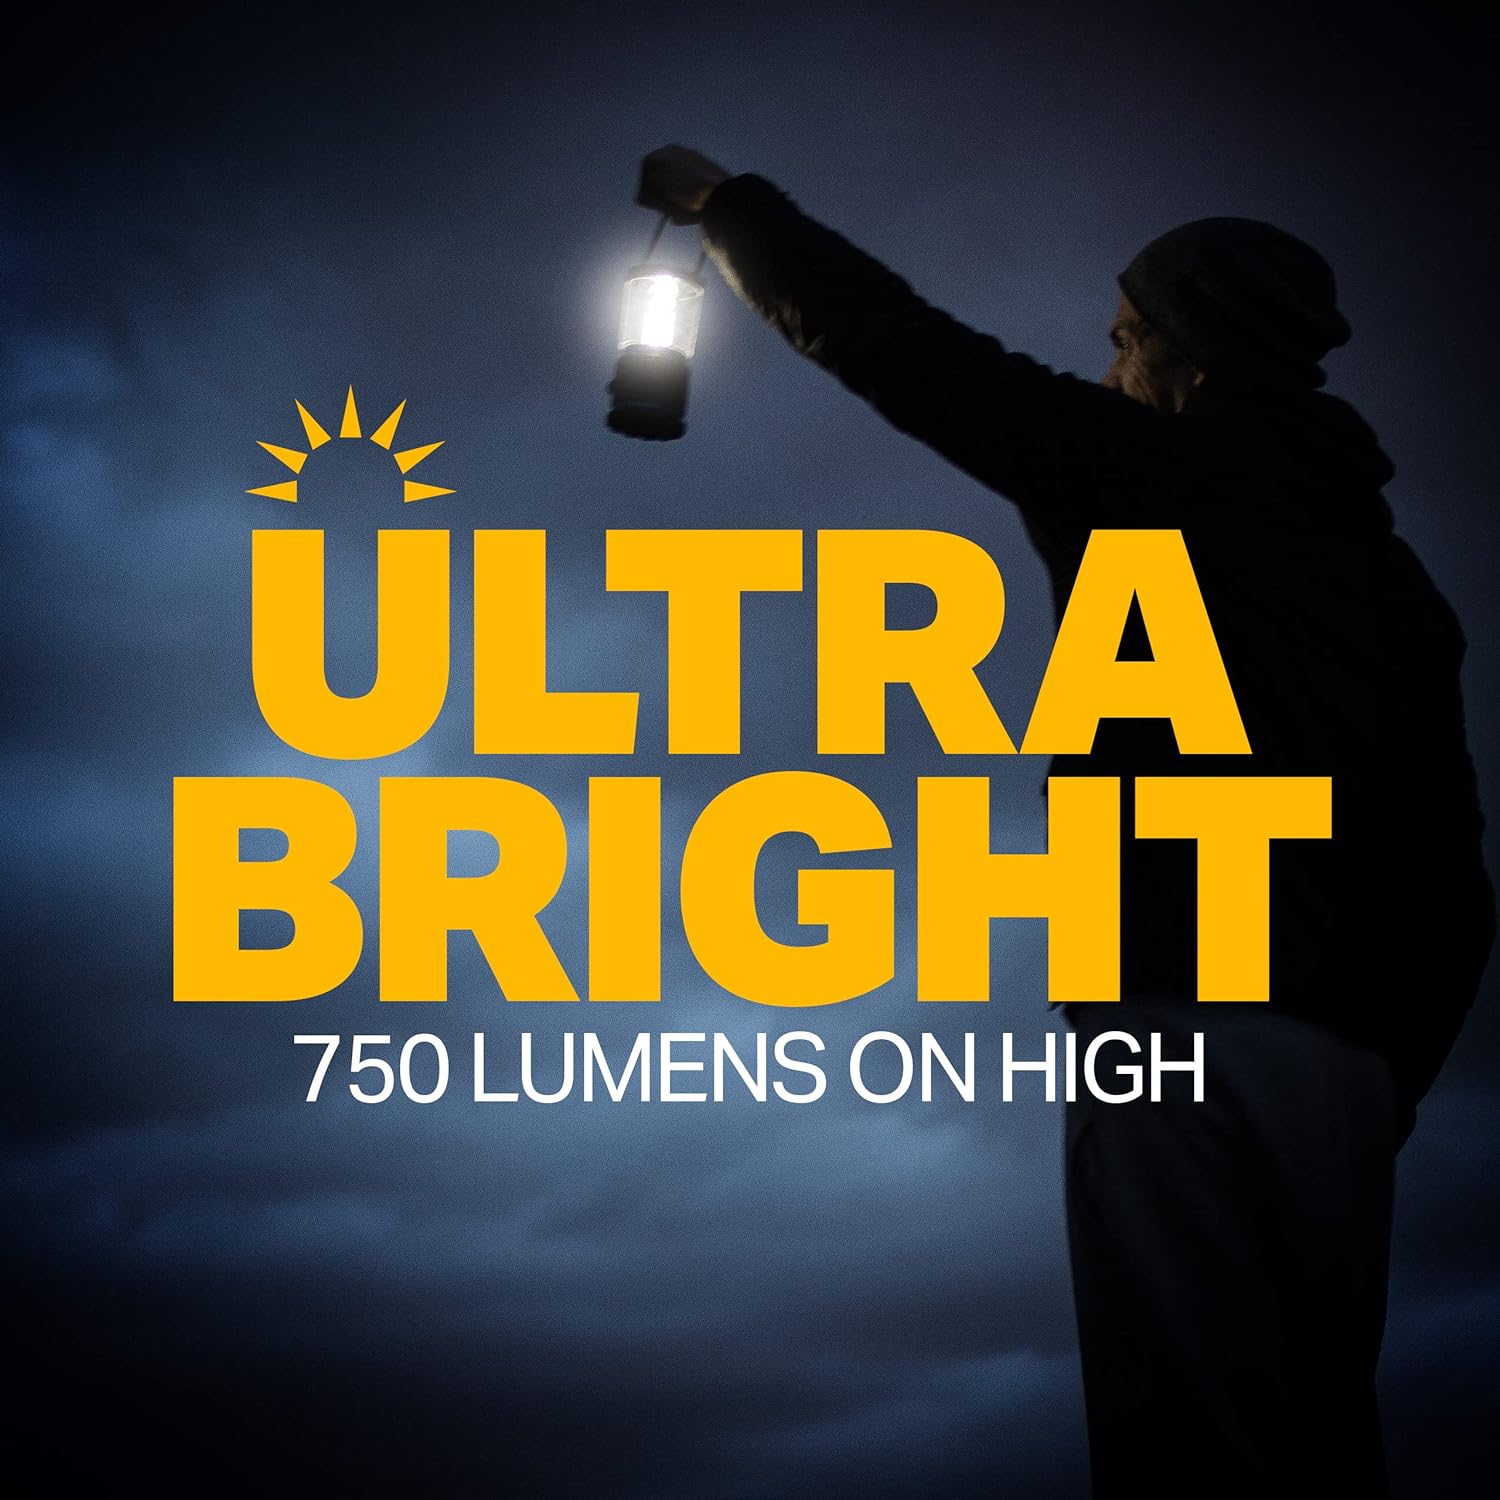 LuxPro Broadbeam Lantern 750 Lumens